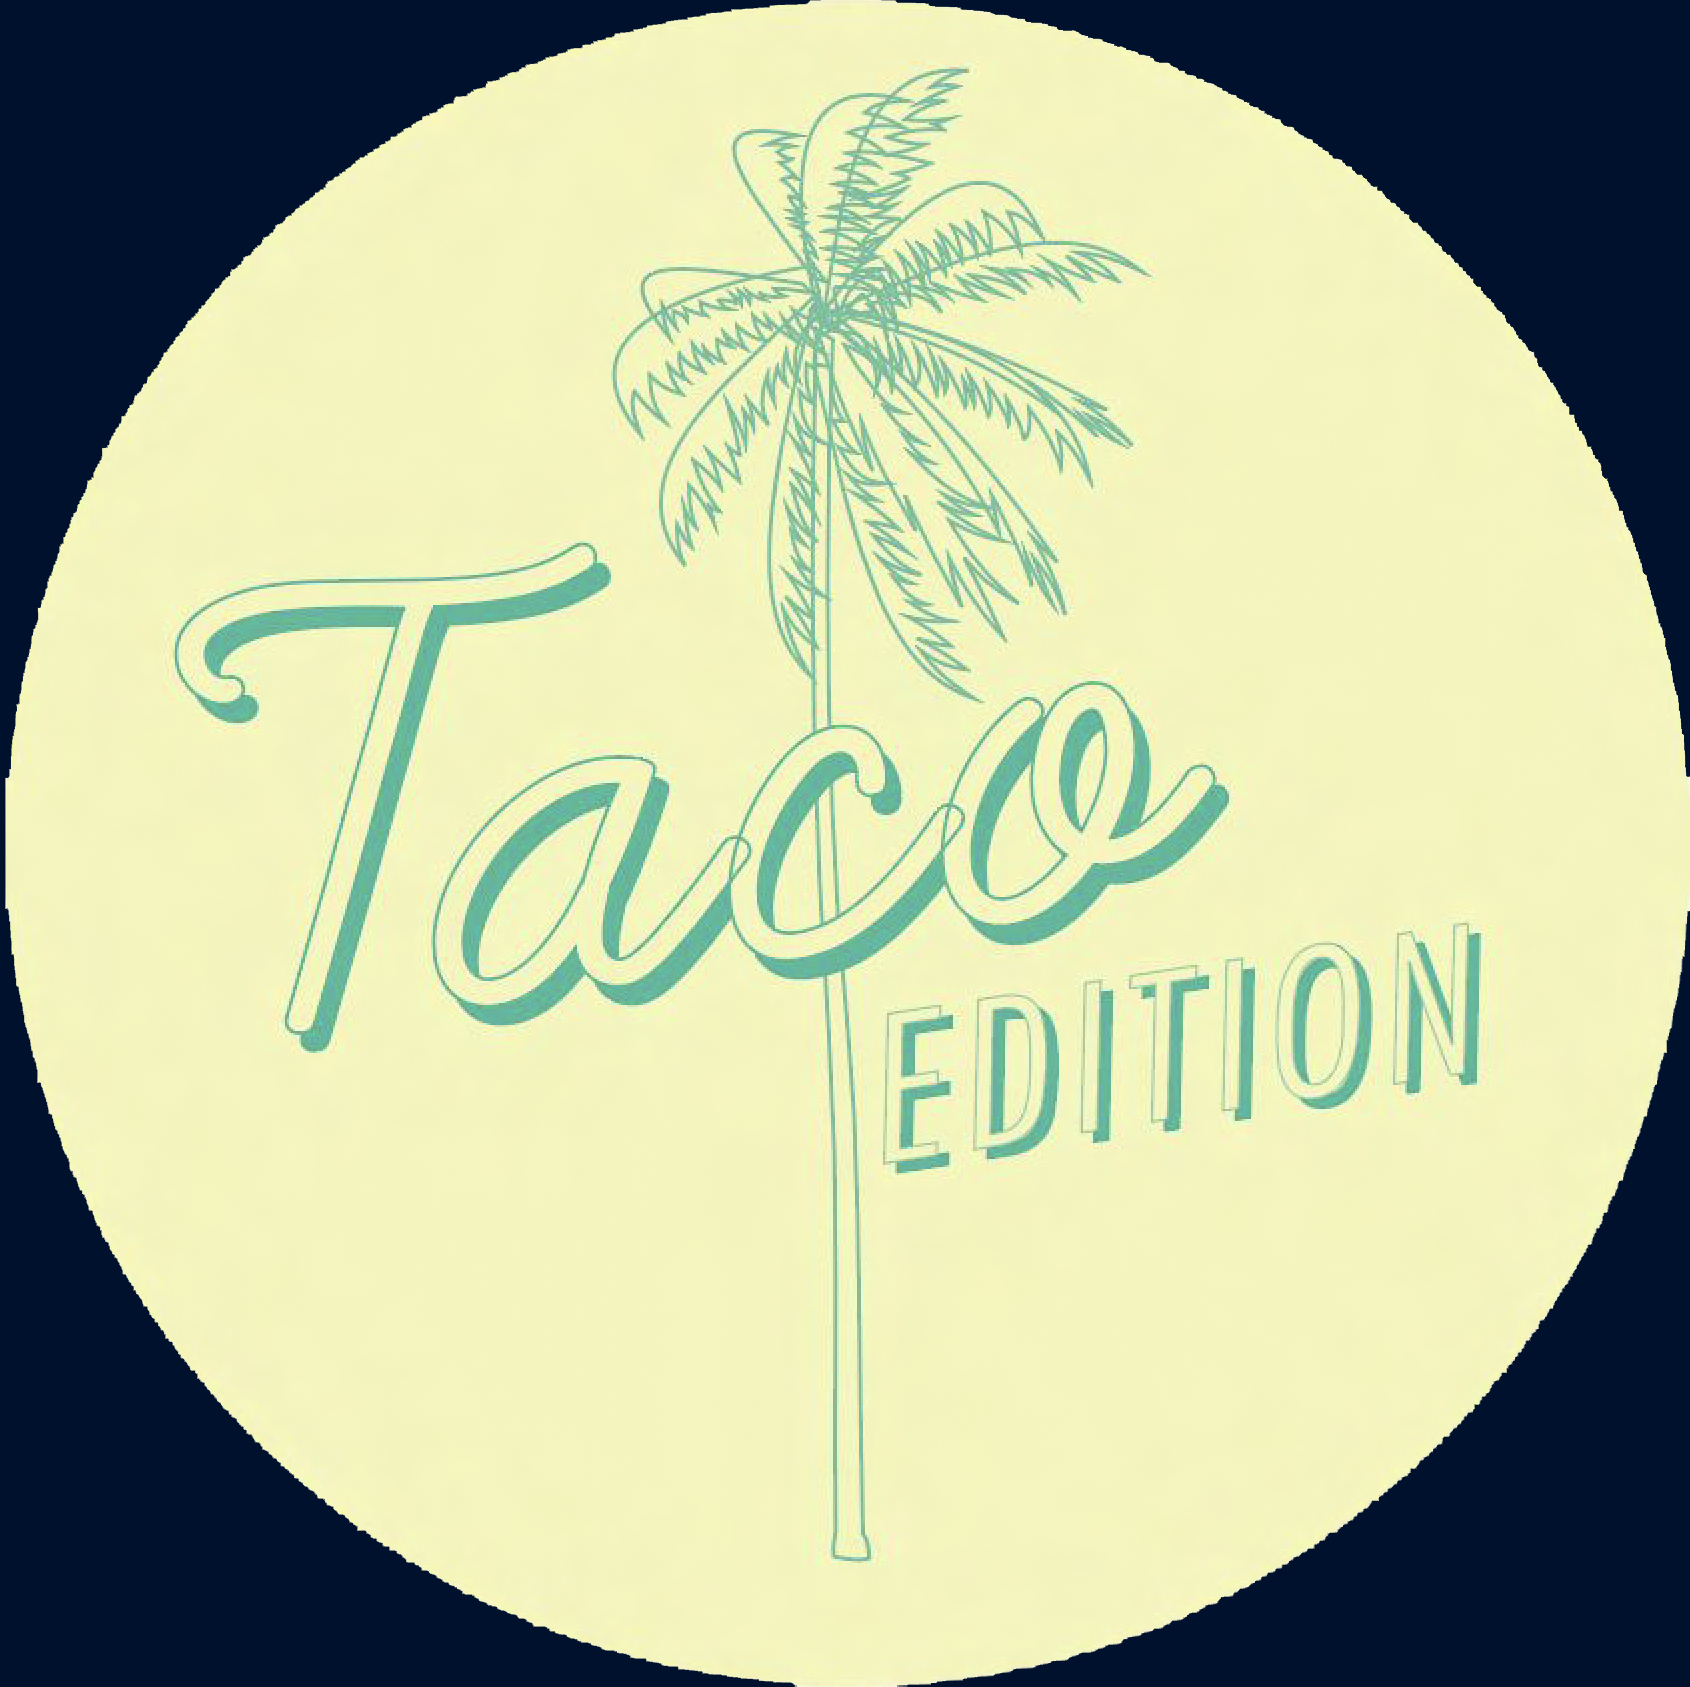 Taco Edition